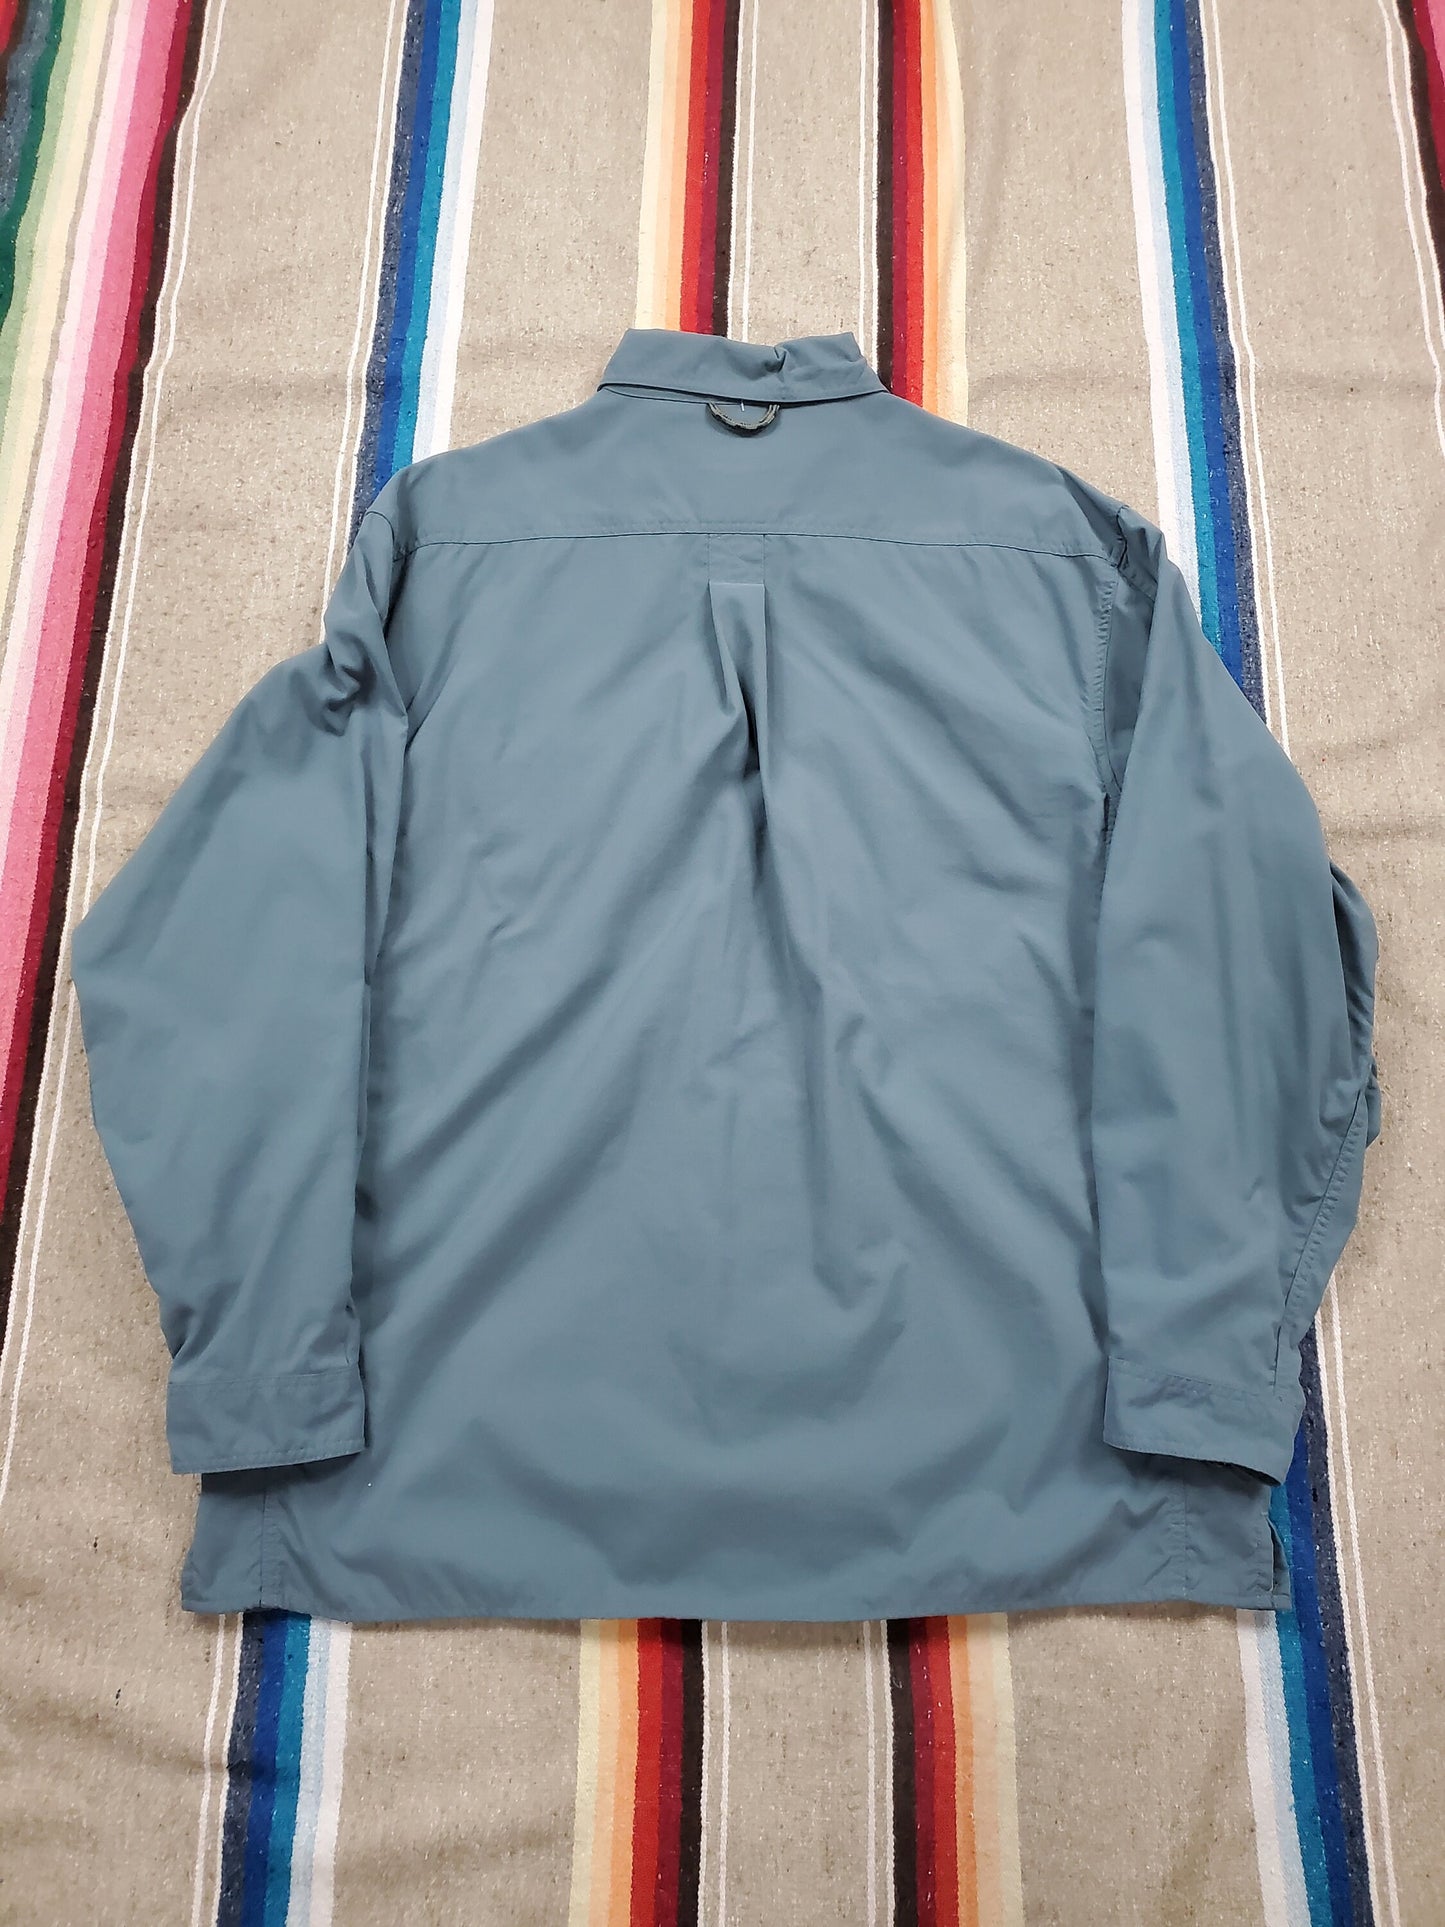 1990s/2000s Ex Officio Travel Wear Bug Shirt Size XL